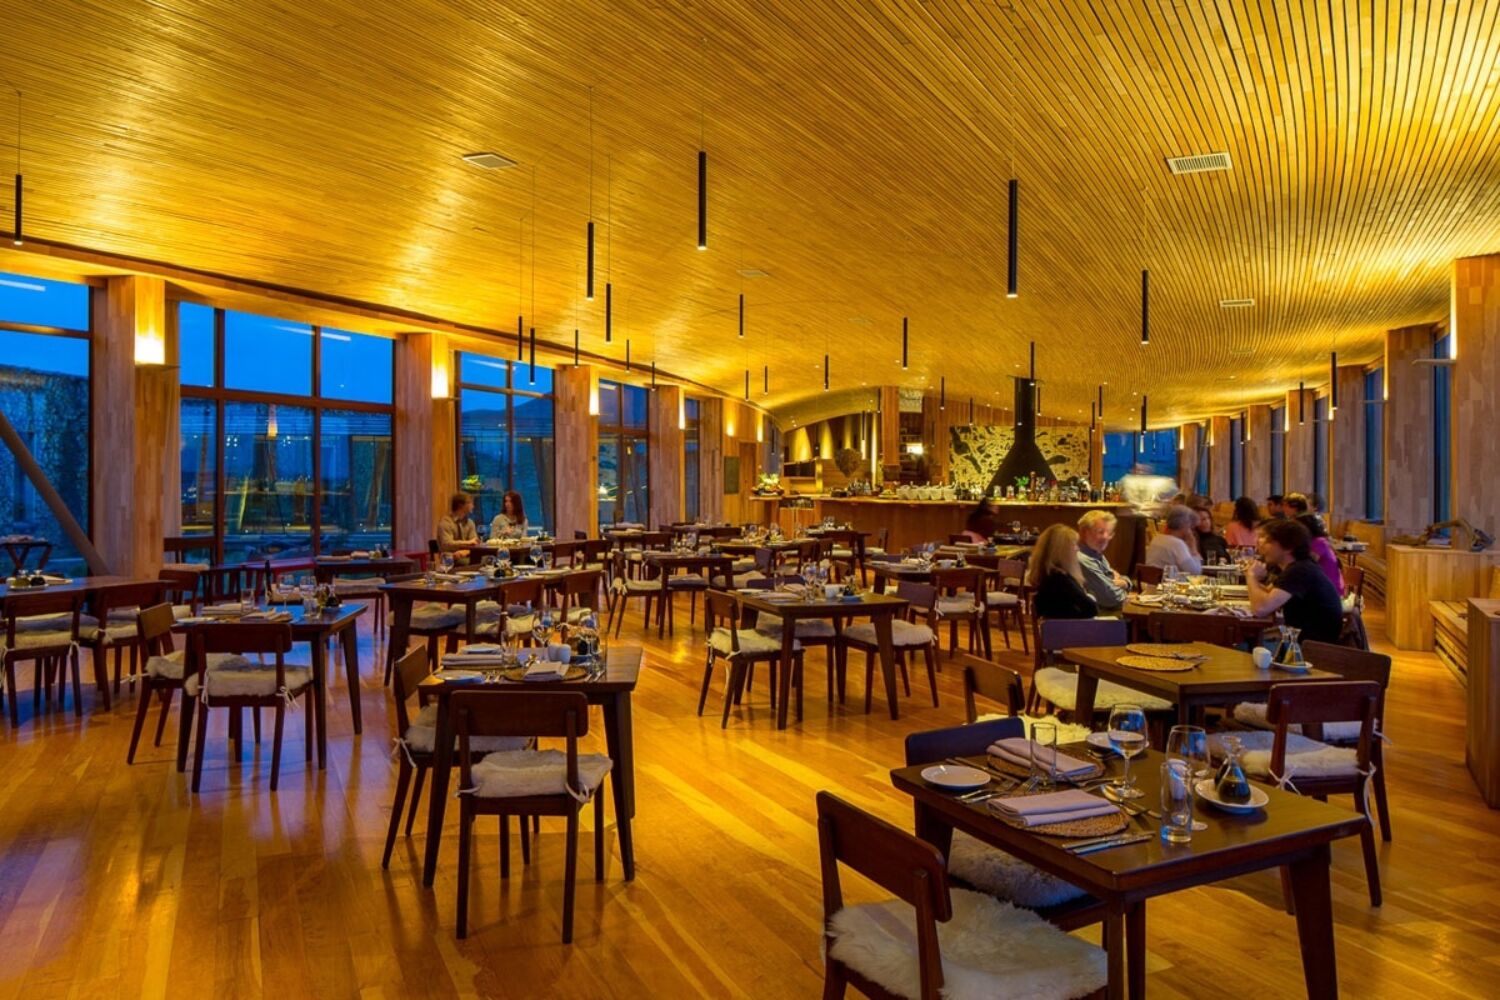 Tierra Patagonia dining room